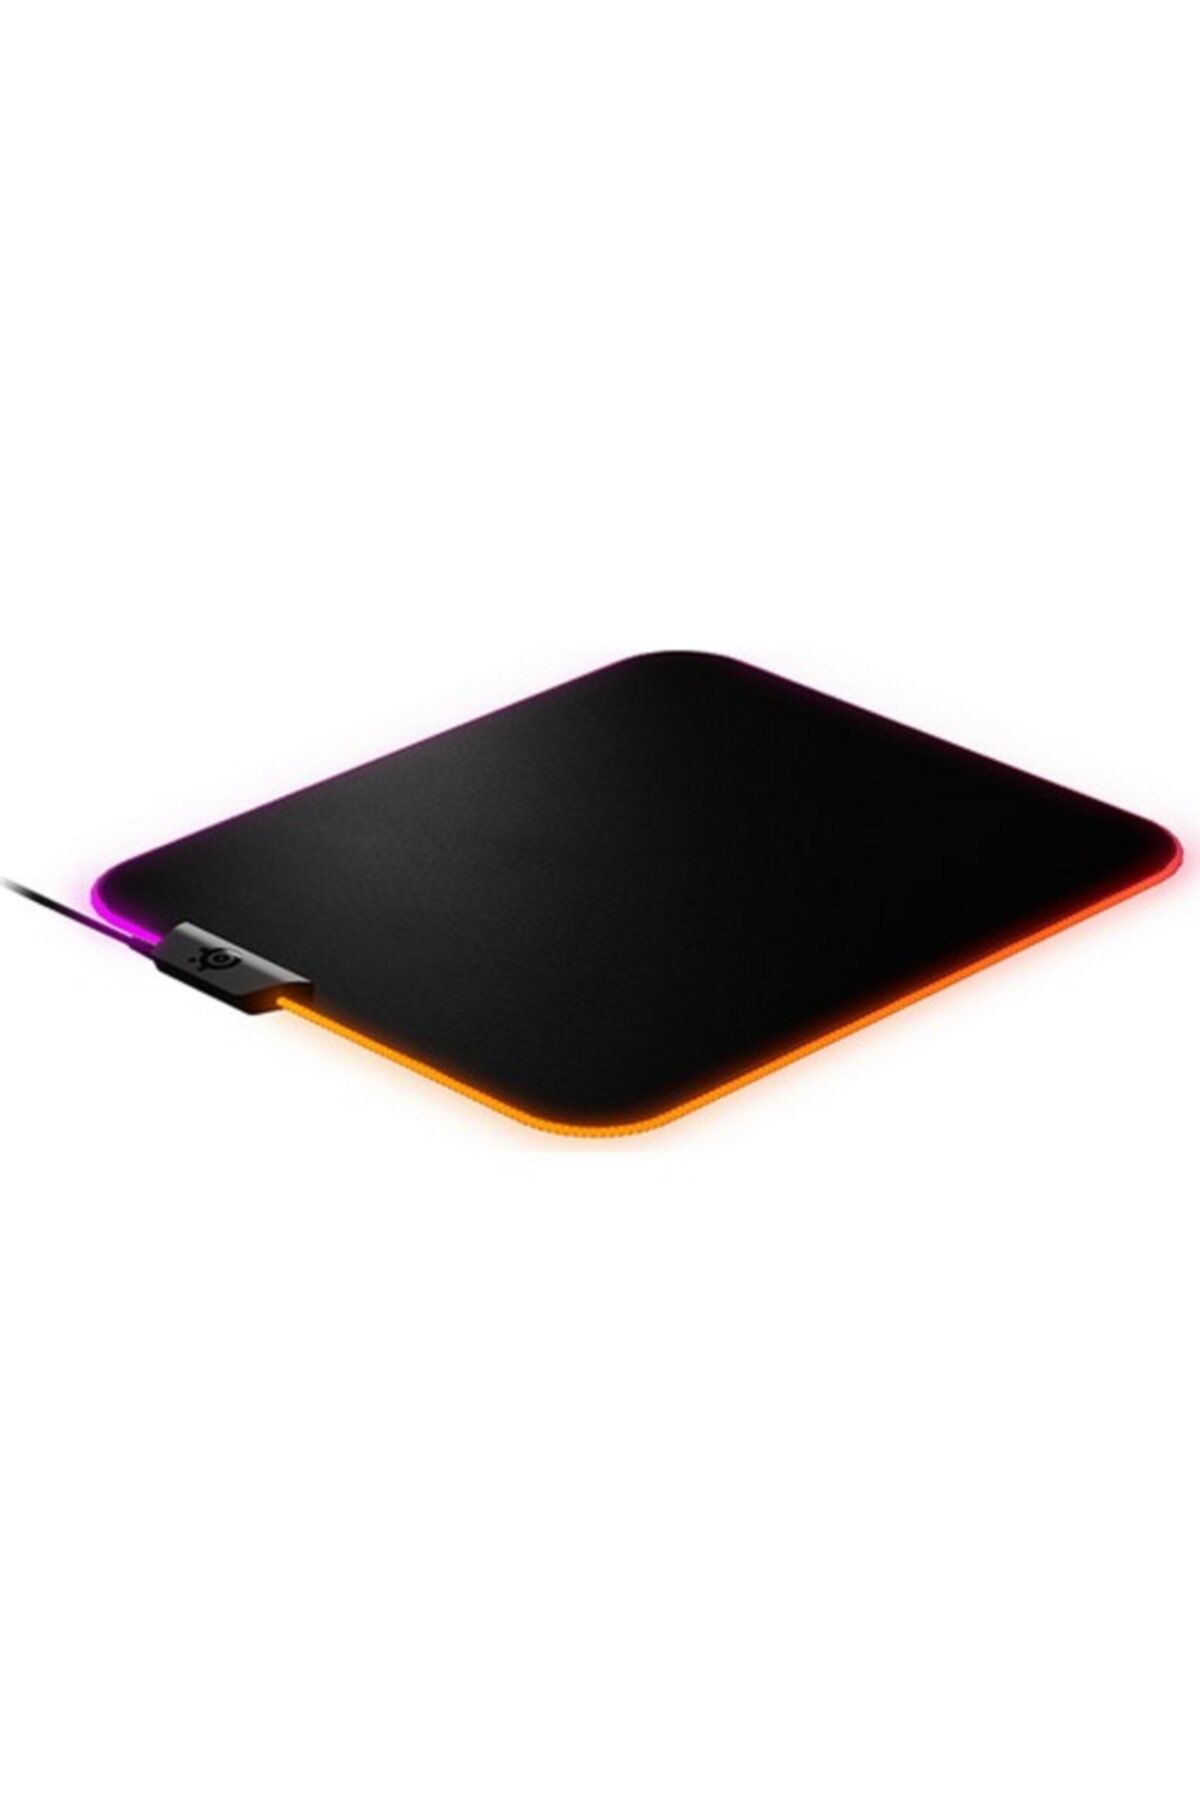 SteelSeries QcK Prism Cloth Medium RGB Gaming Mousepad